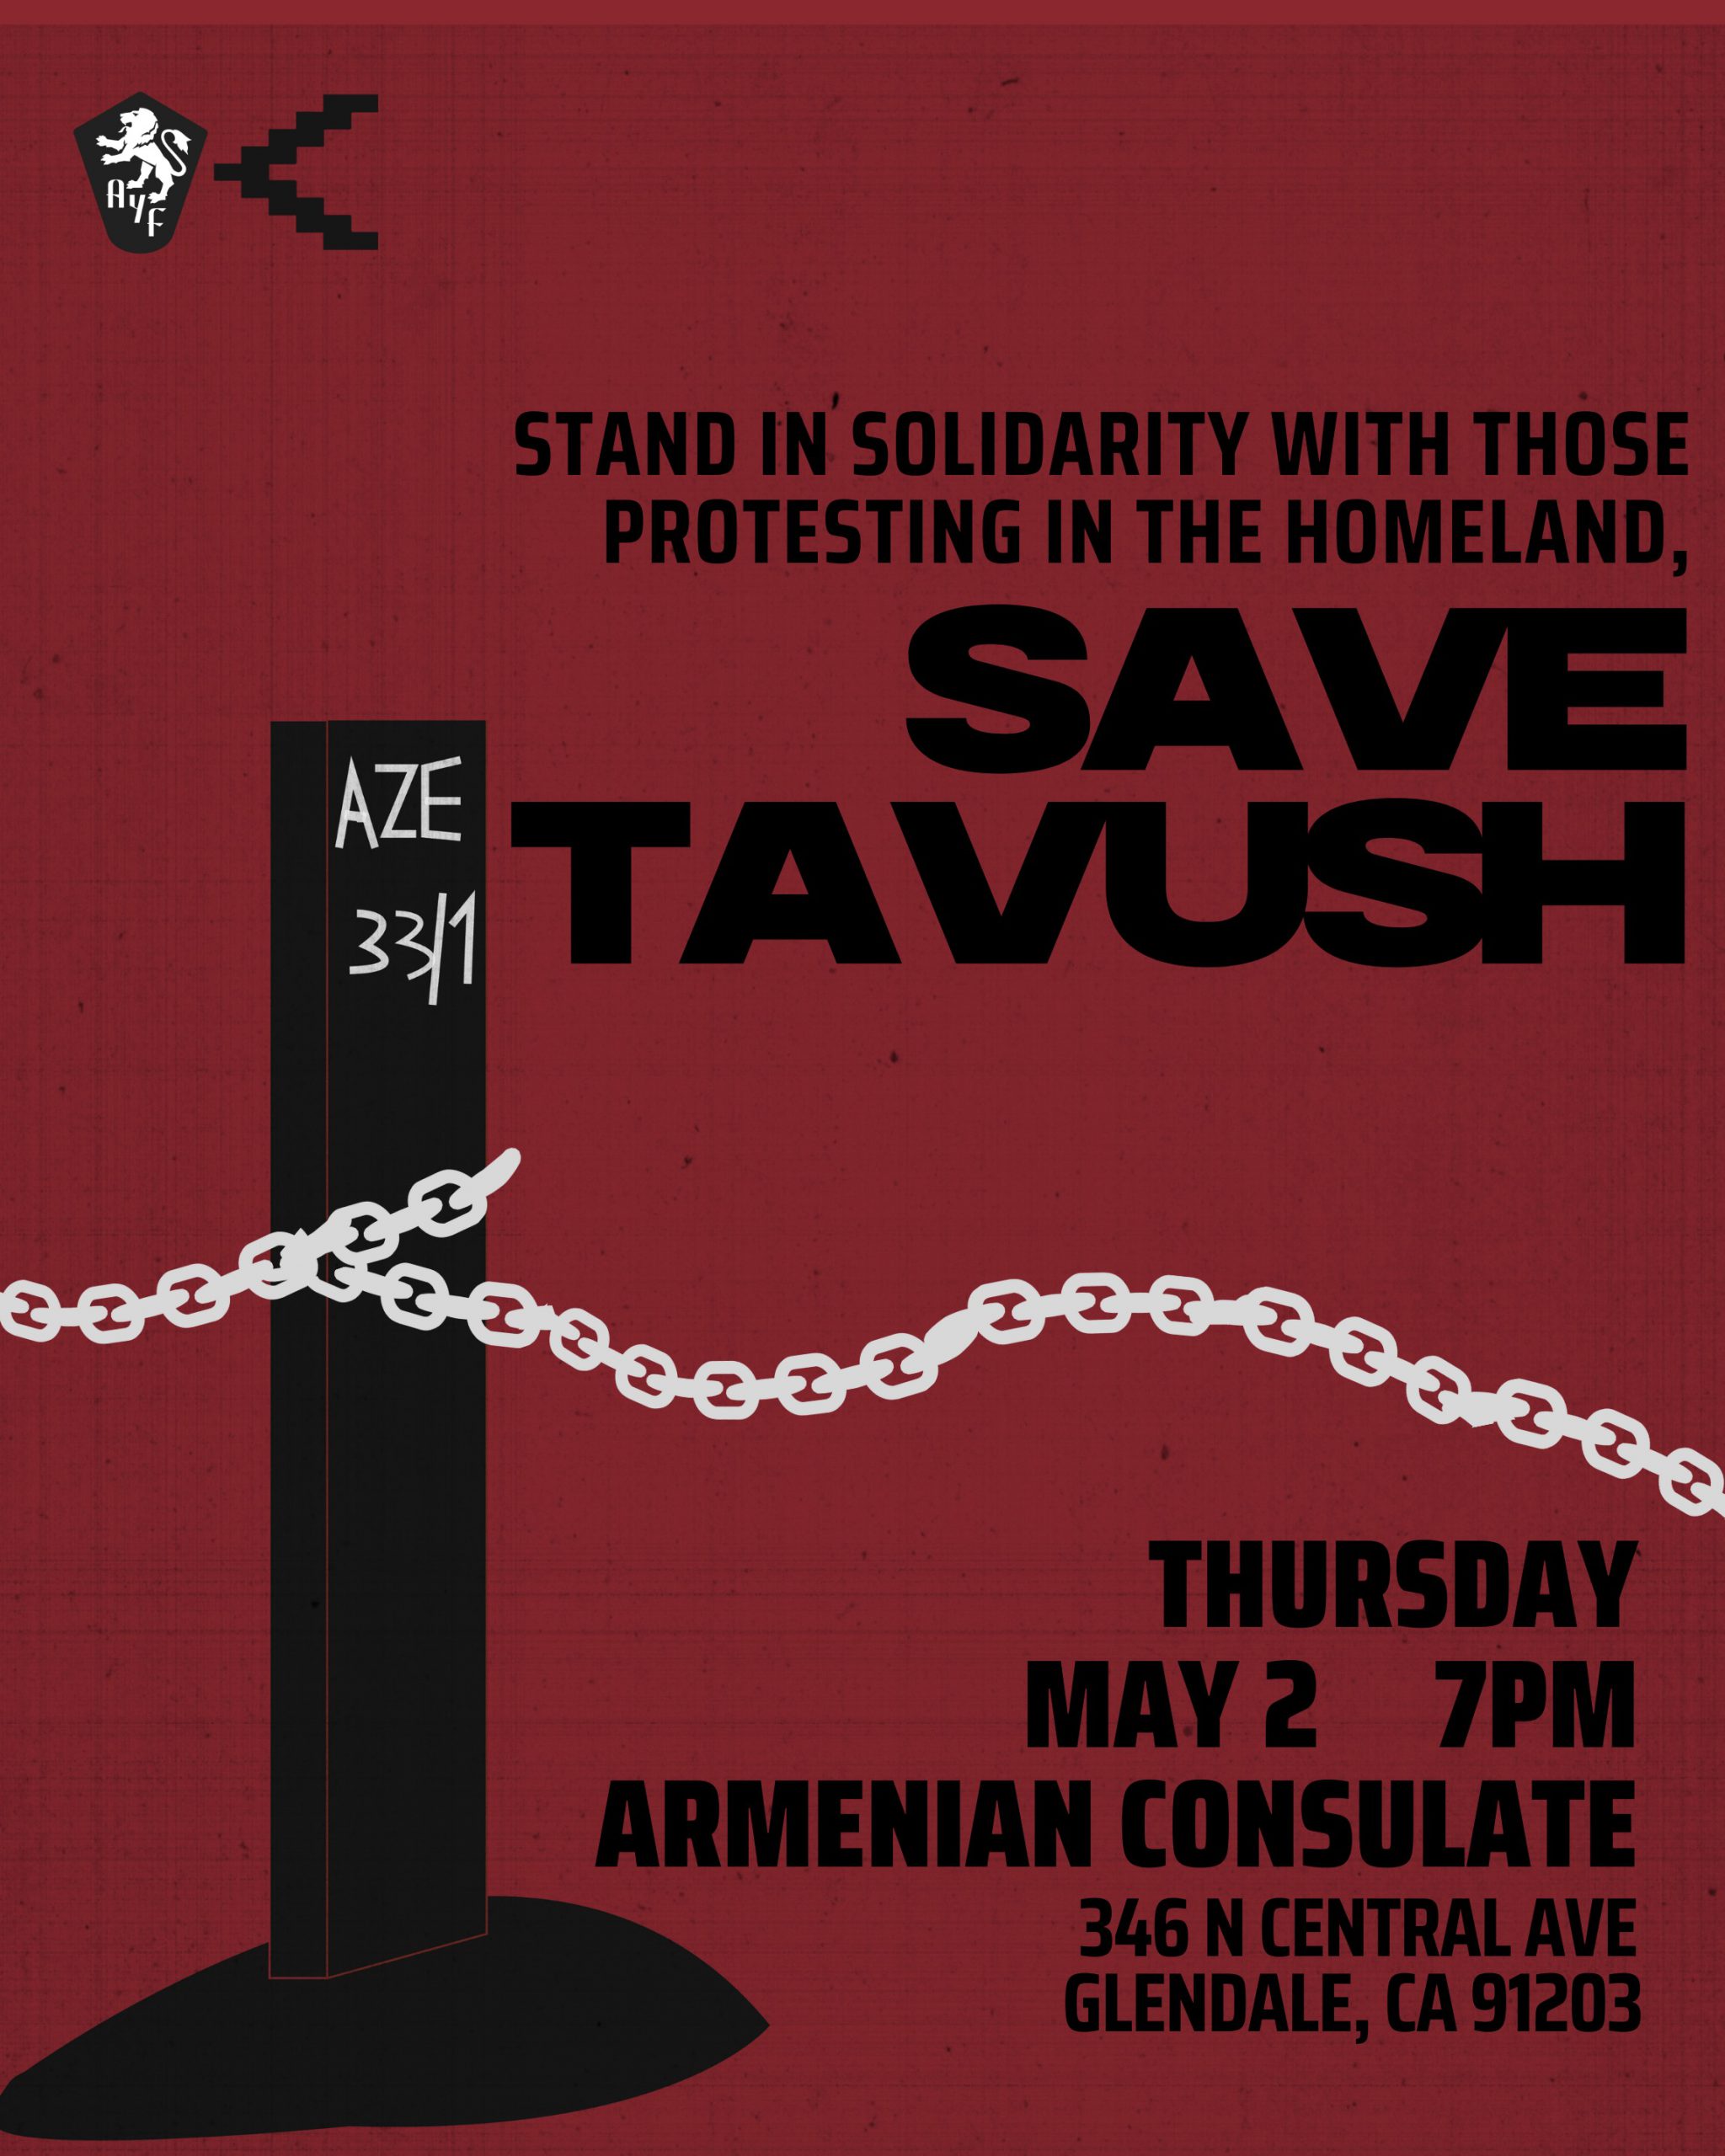 AYF-WUS ORGANIZES URGENT SAVE TAVUSH PROTEST